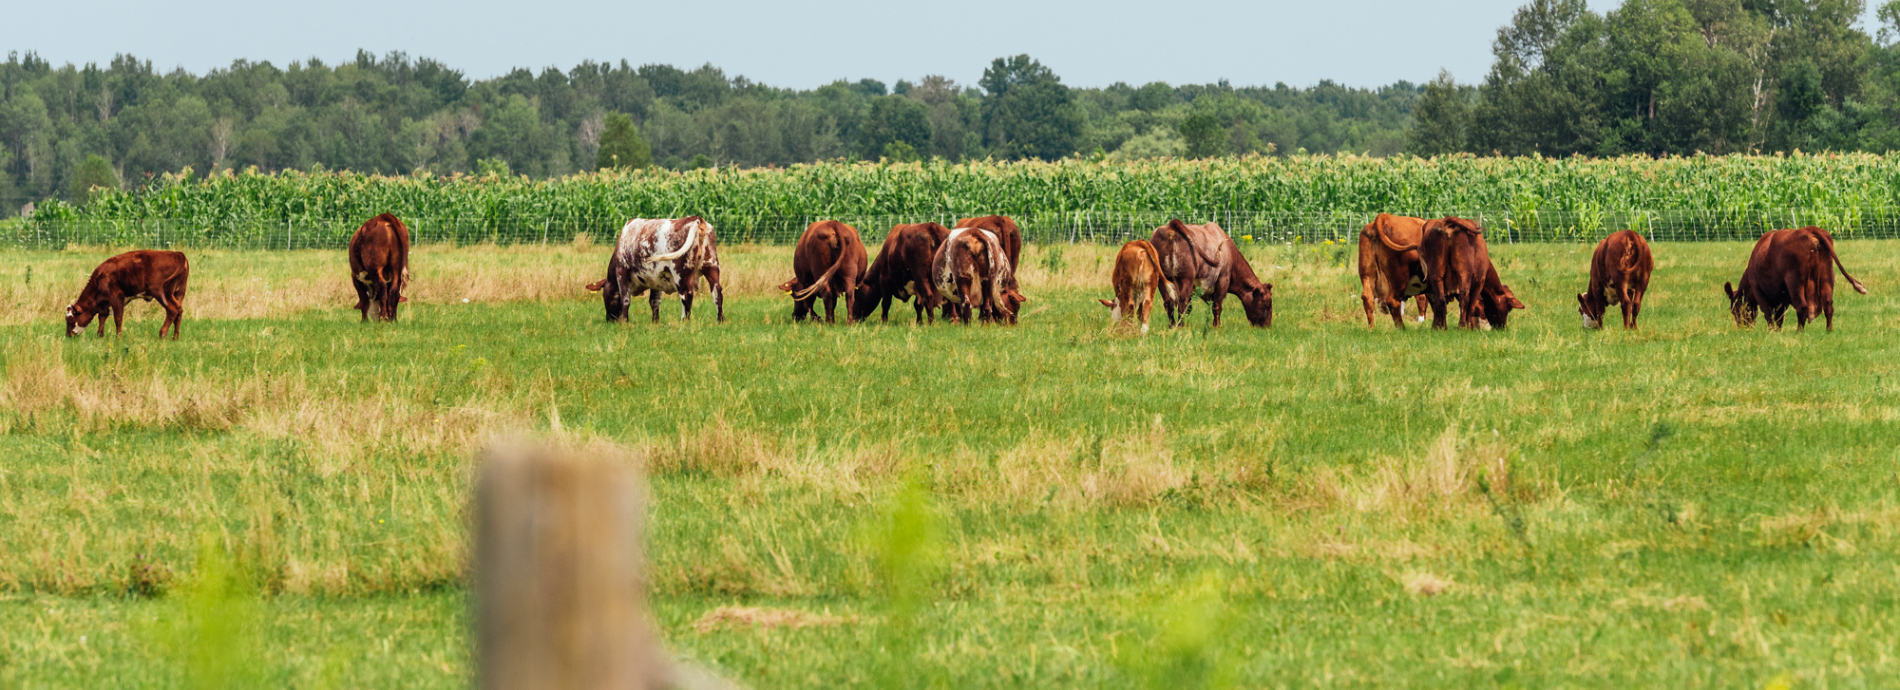 cows in a rural field